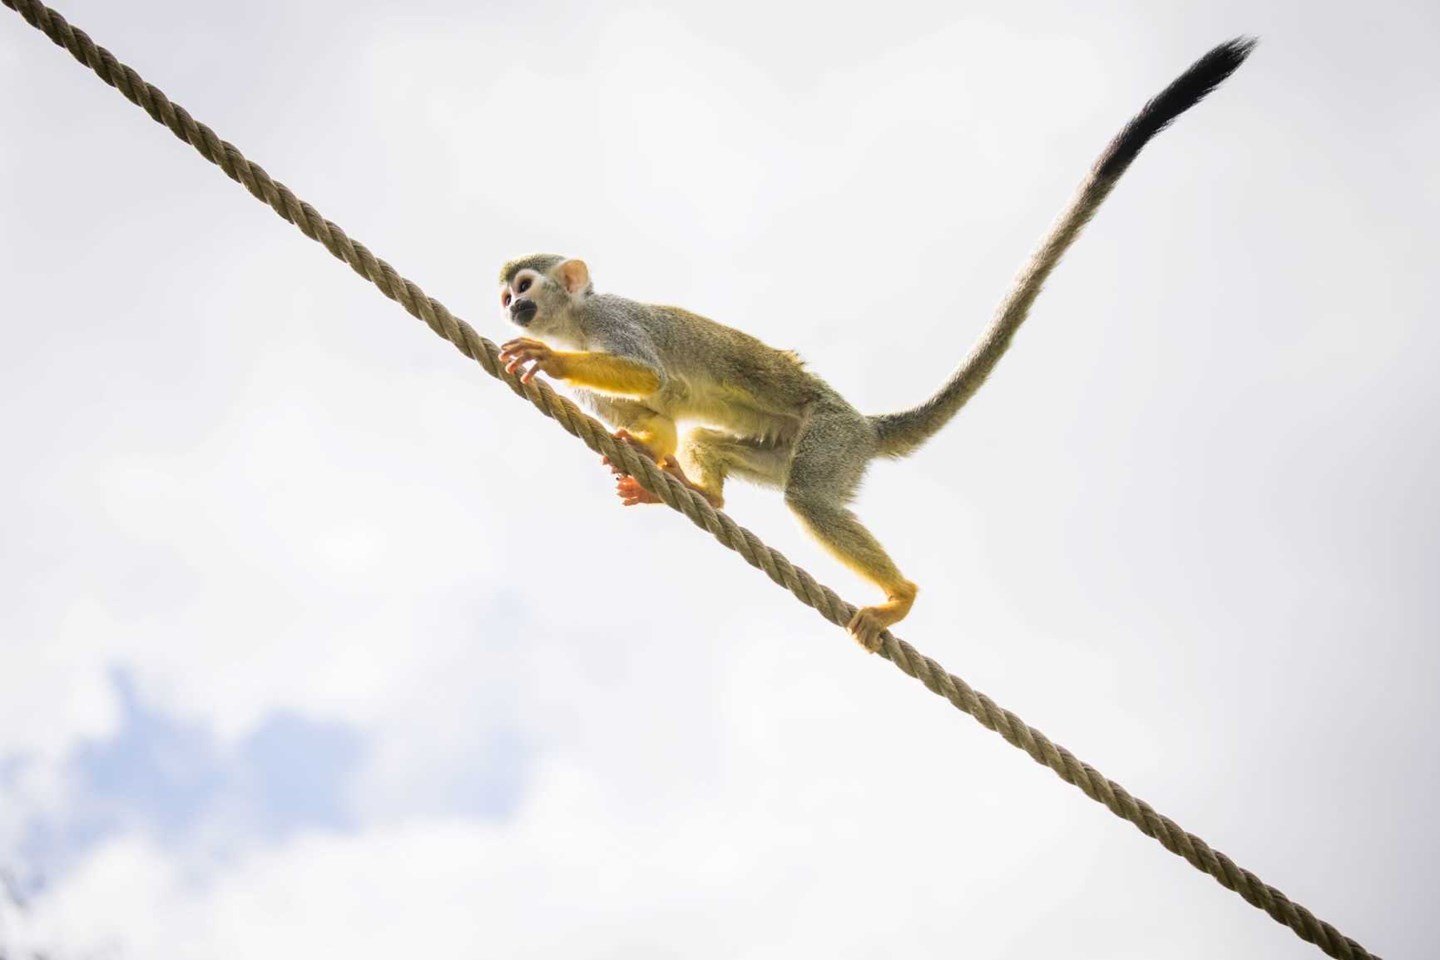 Image of squirrel monkey climbs across rope at woburn safari park 